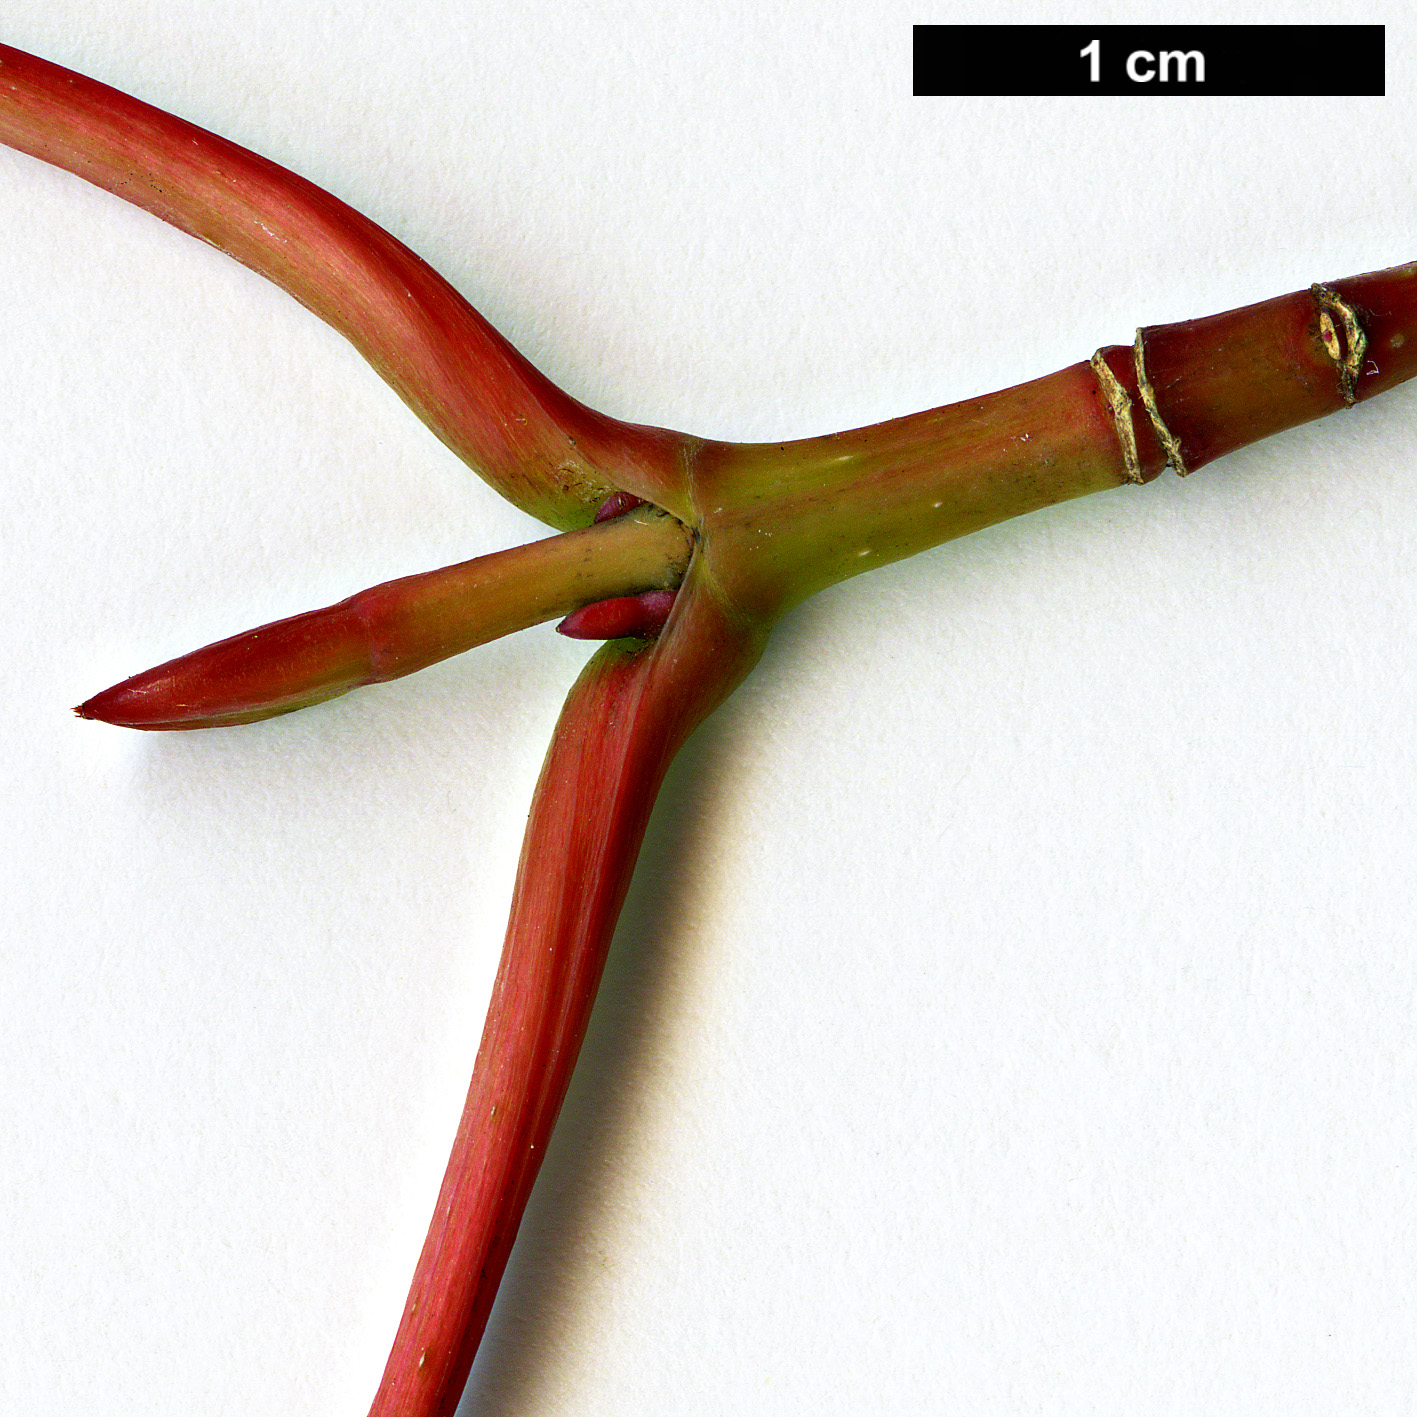 High resolution image: Family: Sapindaceae - Genus: Acer - Taxon: chienii